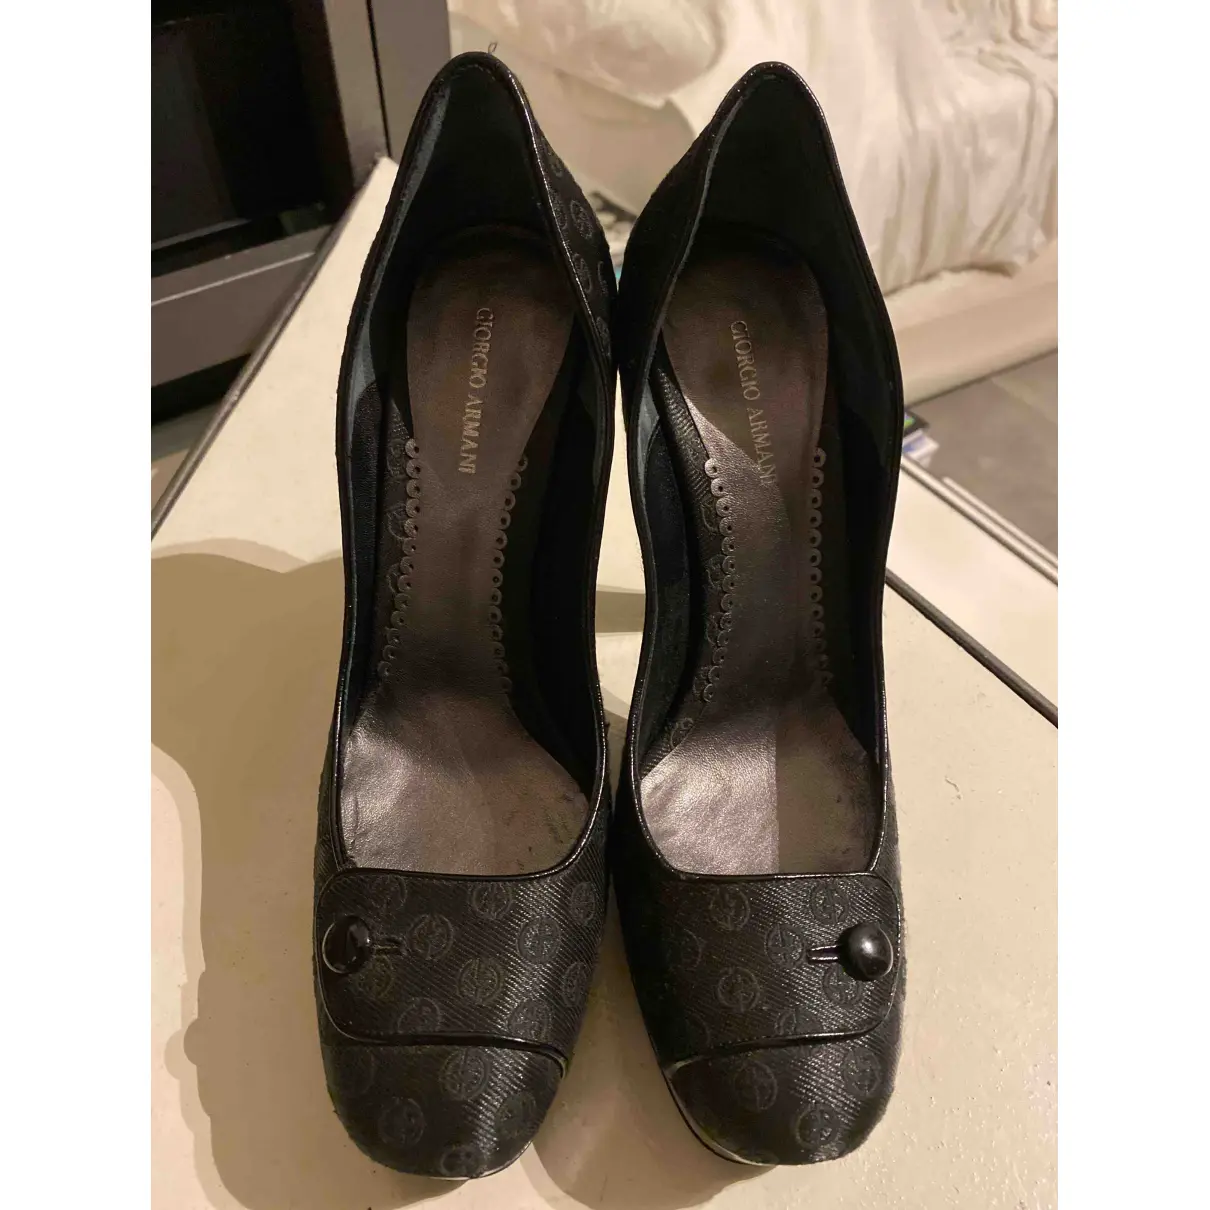 Buy Giorgio Armani Leather heels online